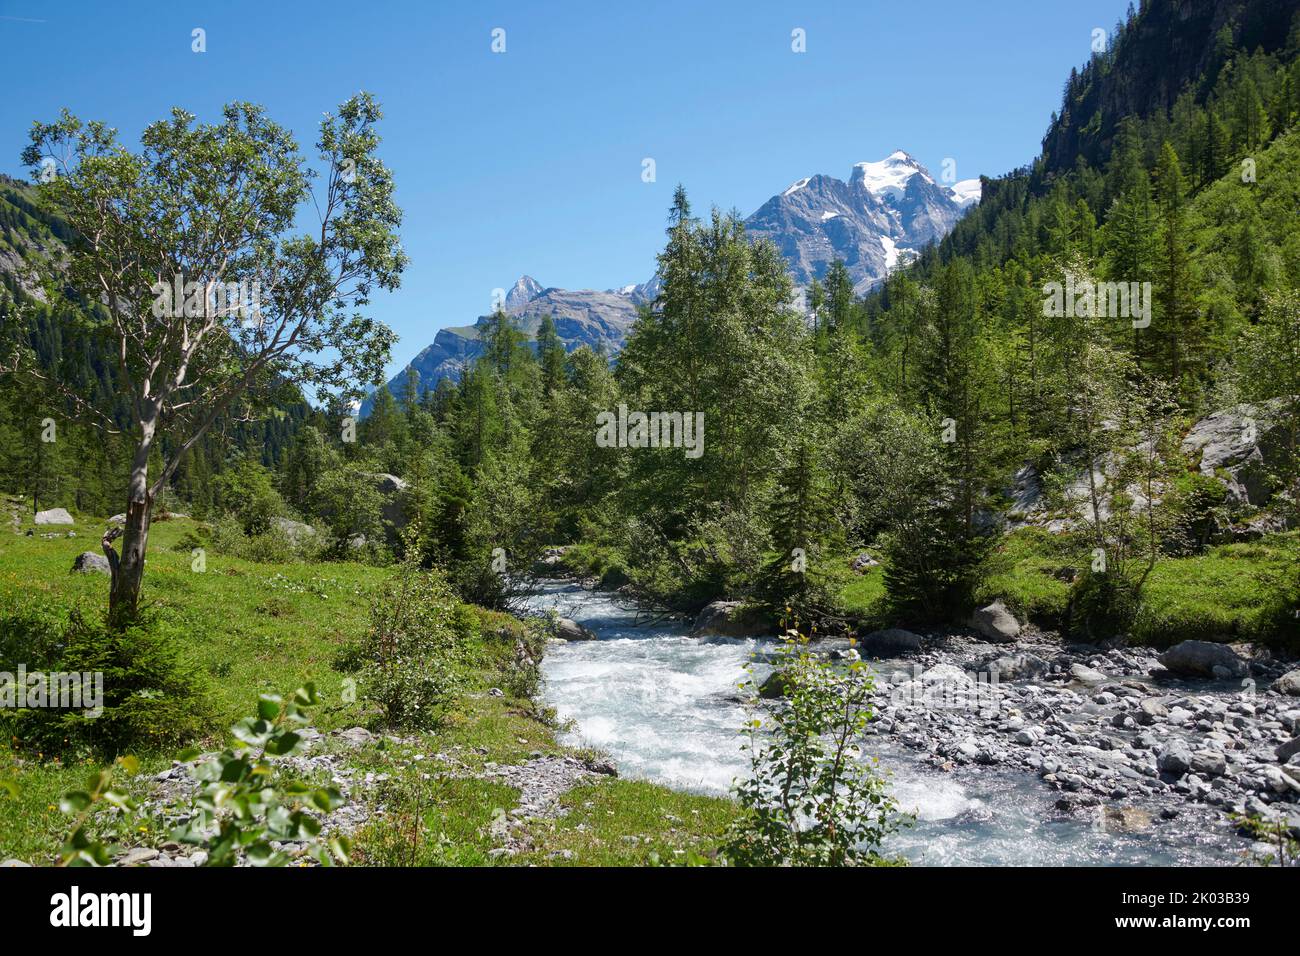 Mountain landscape in Sefinental, Switzerland Stock Photo